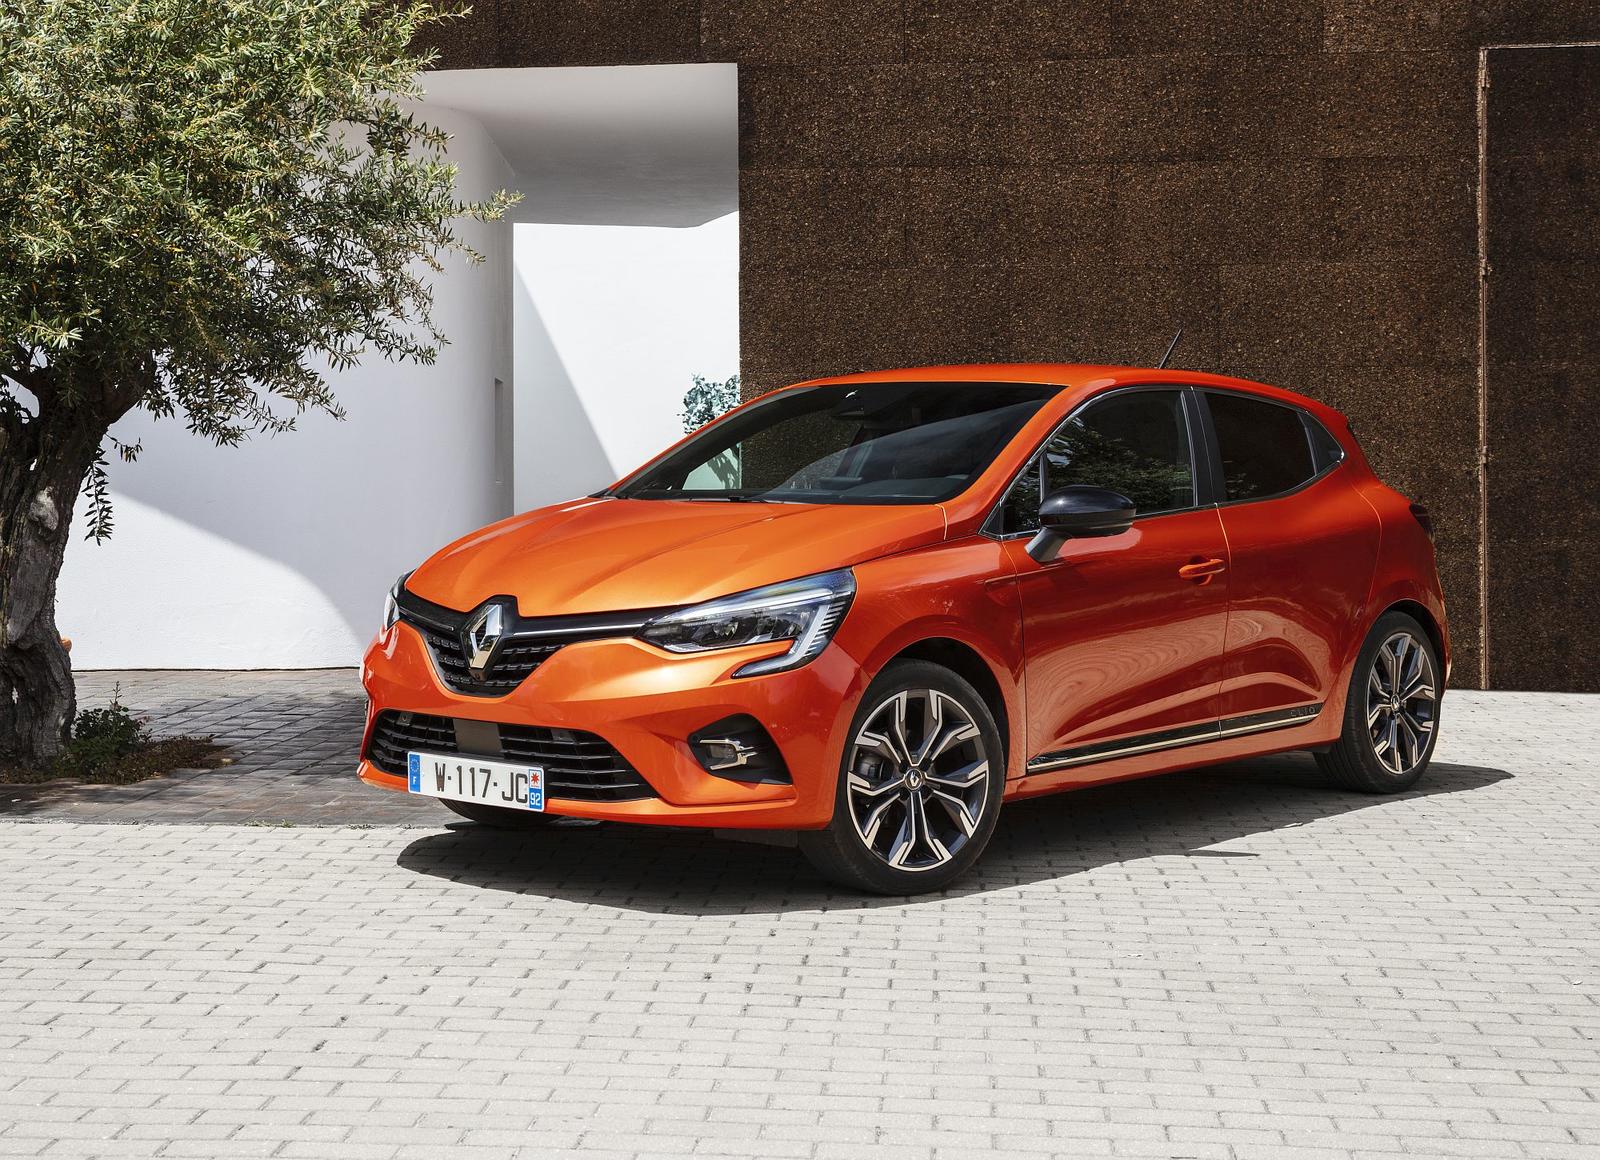 All-new Renault Clio Intens – Orange Valencia (17)